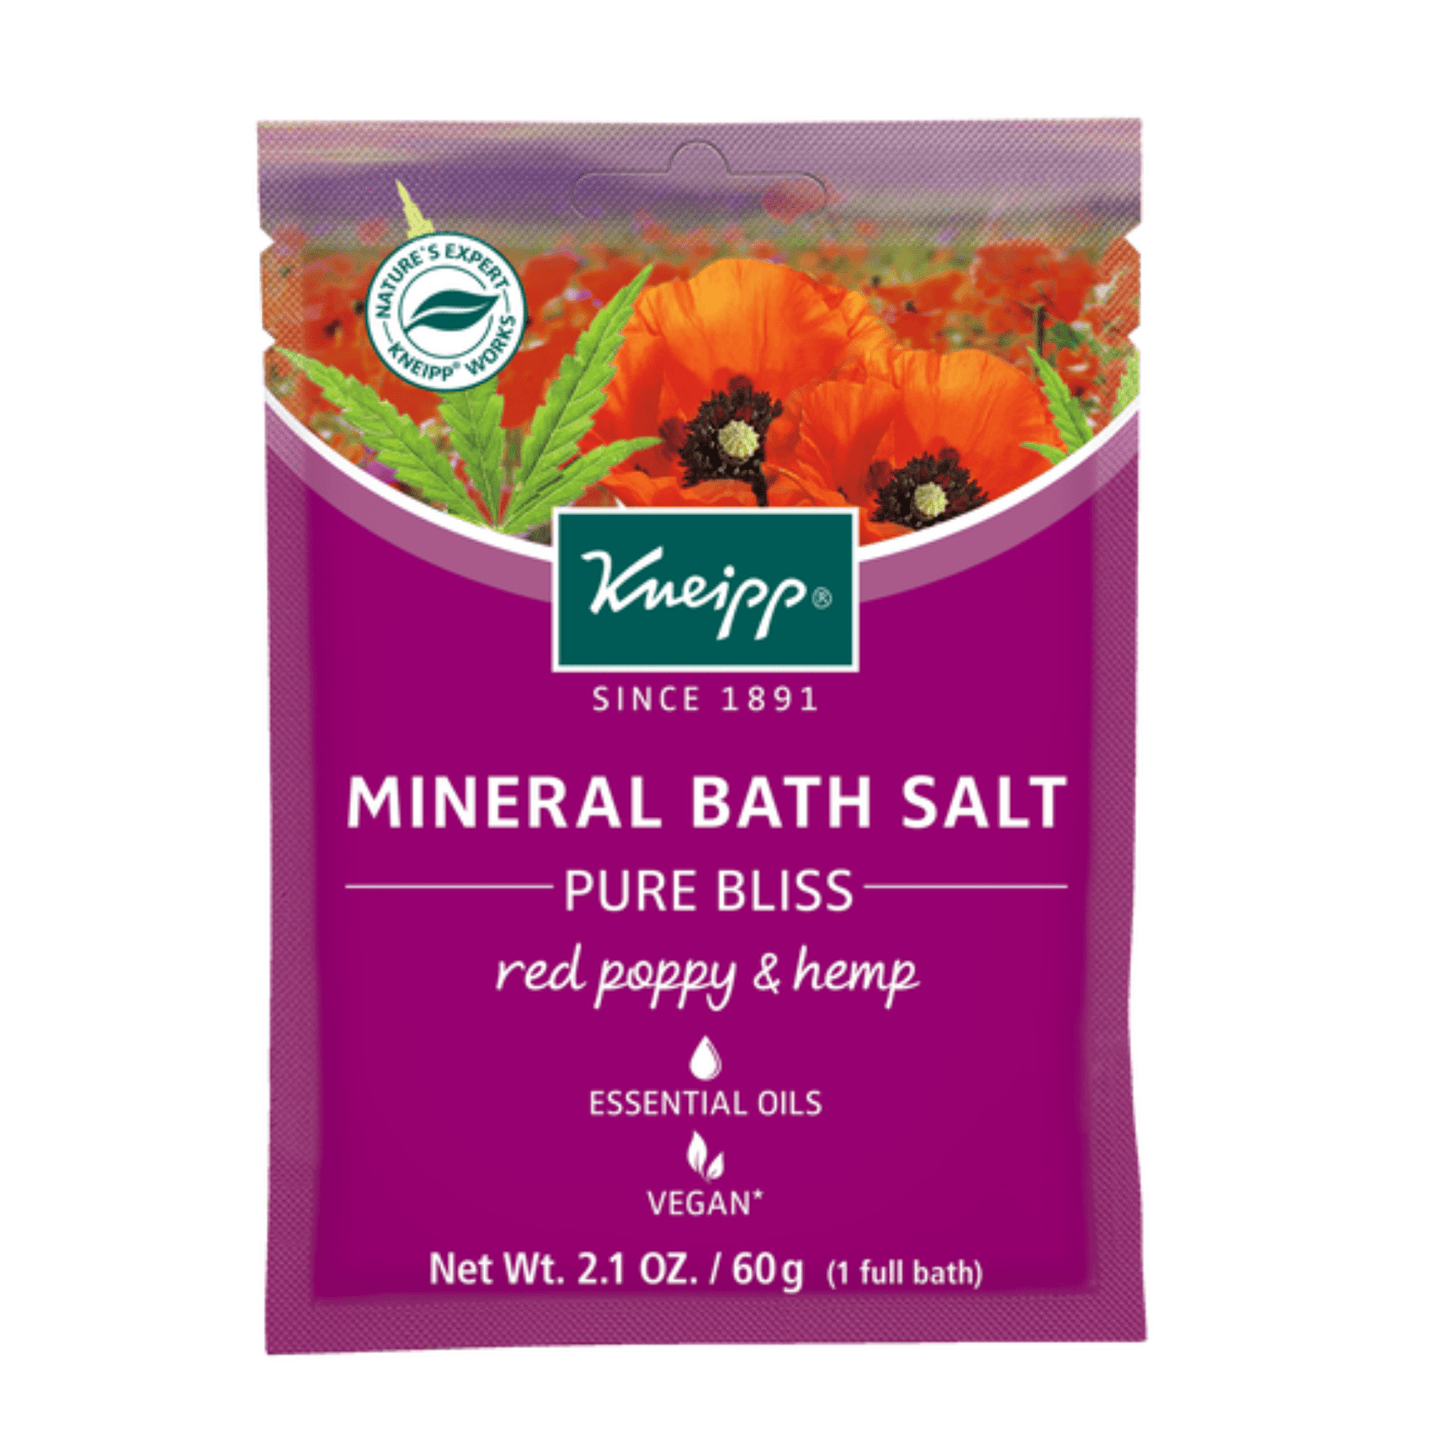 Primary Image of Red Poppy & Hemp Pure Bliss Bath Salt Sachet